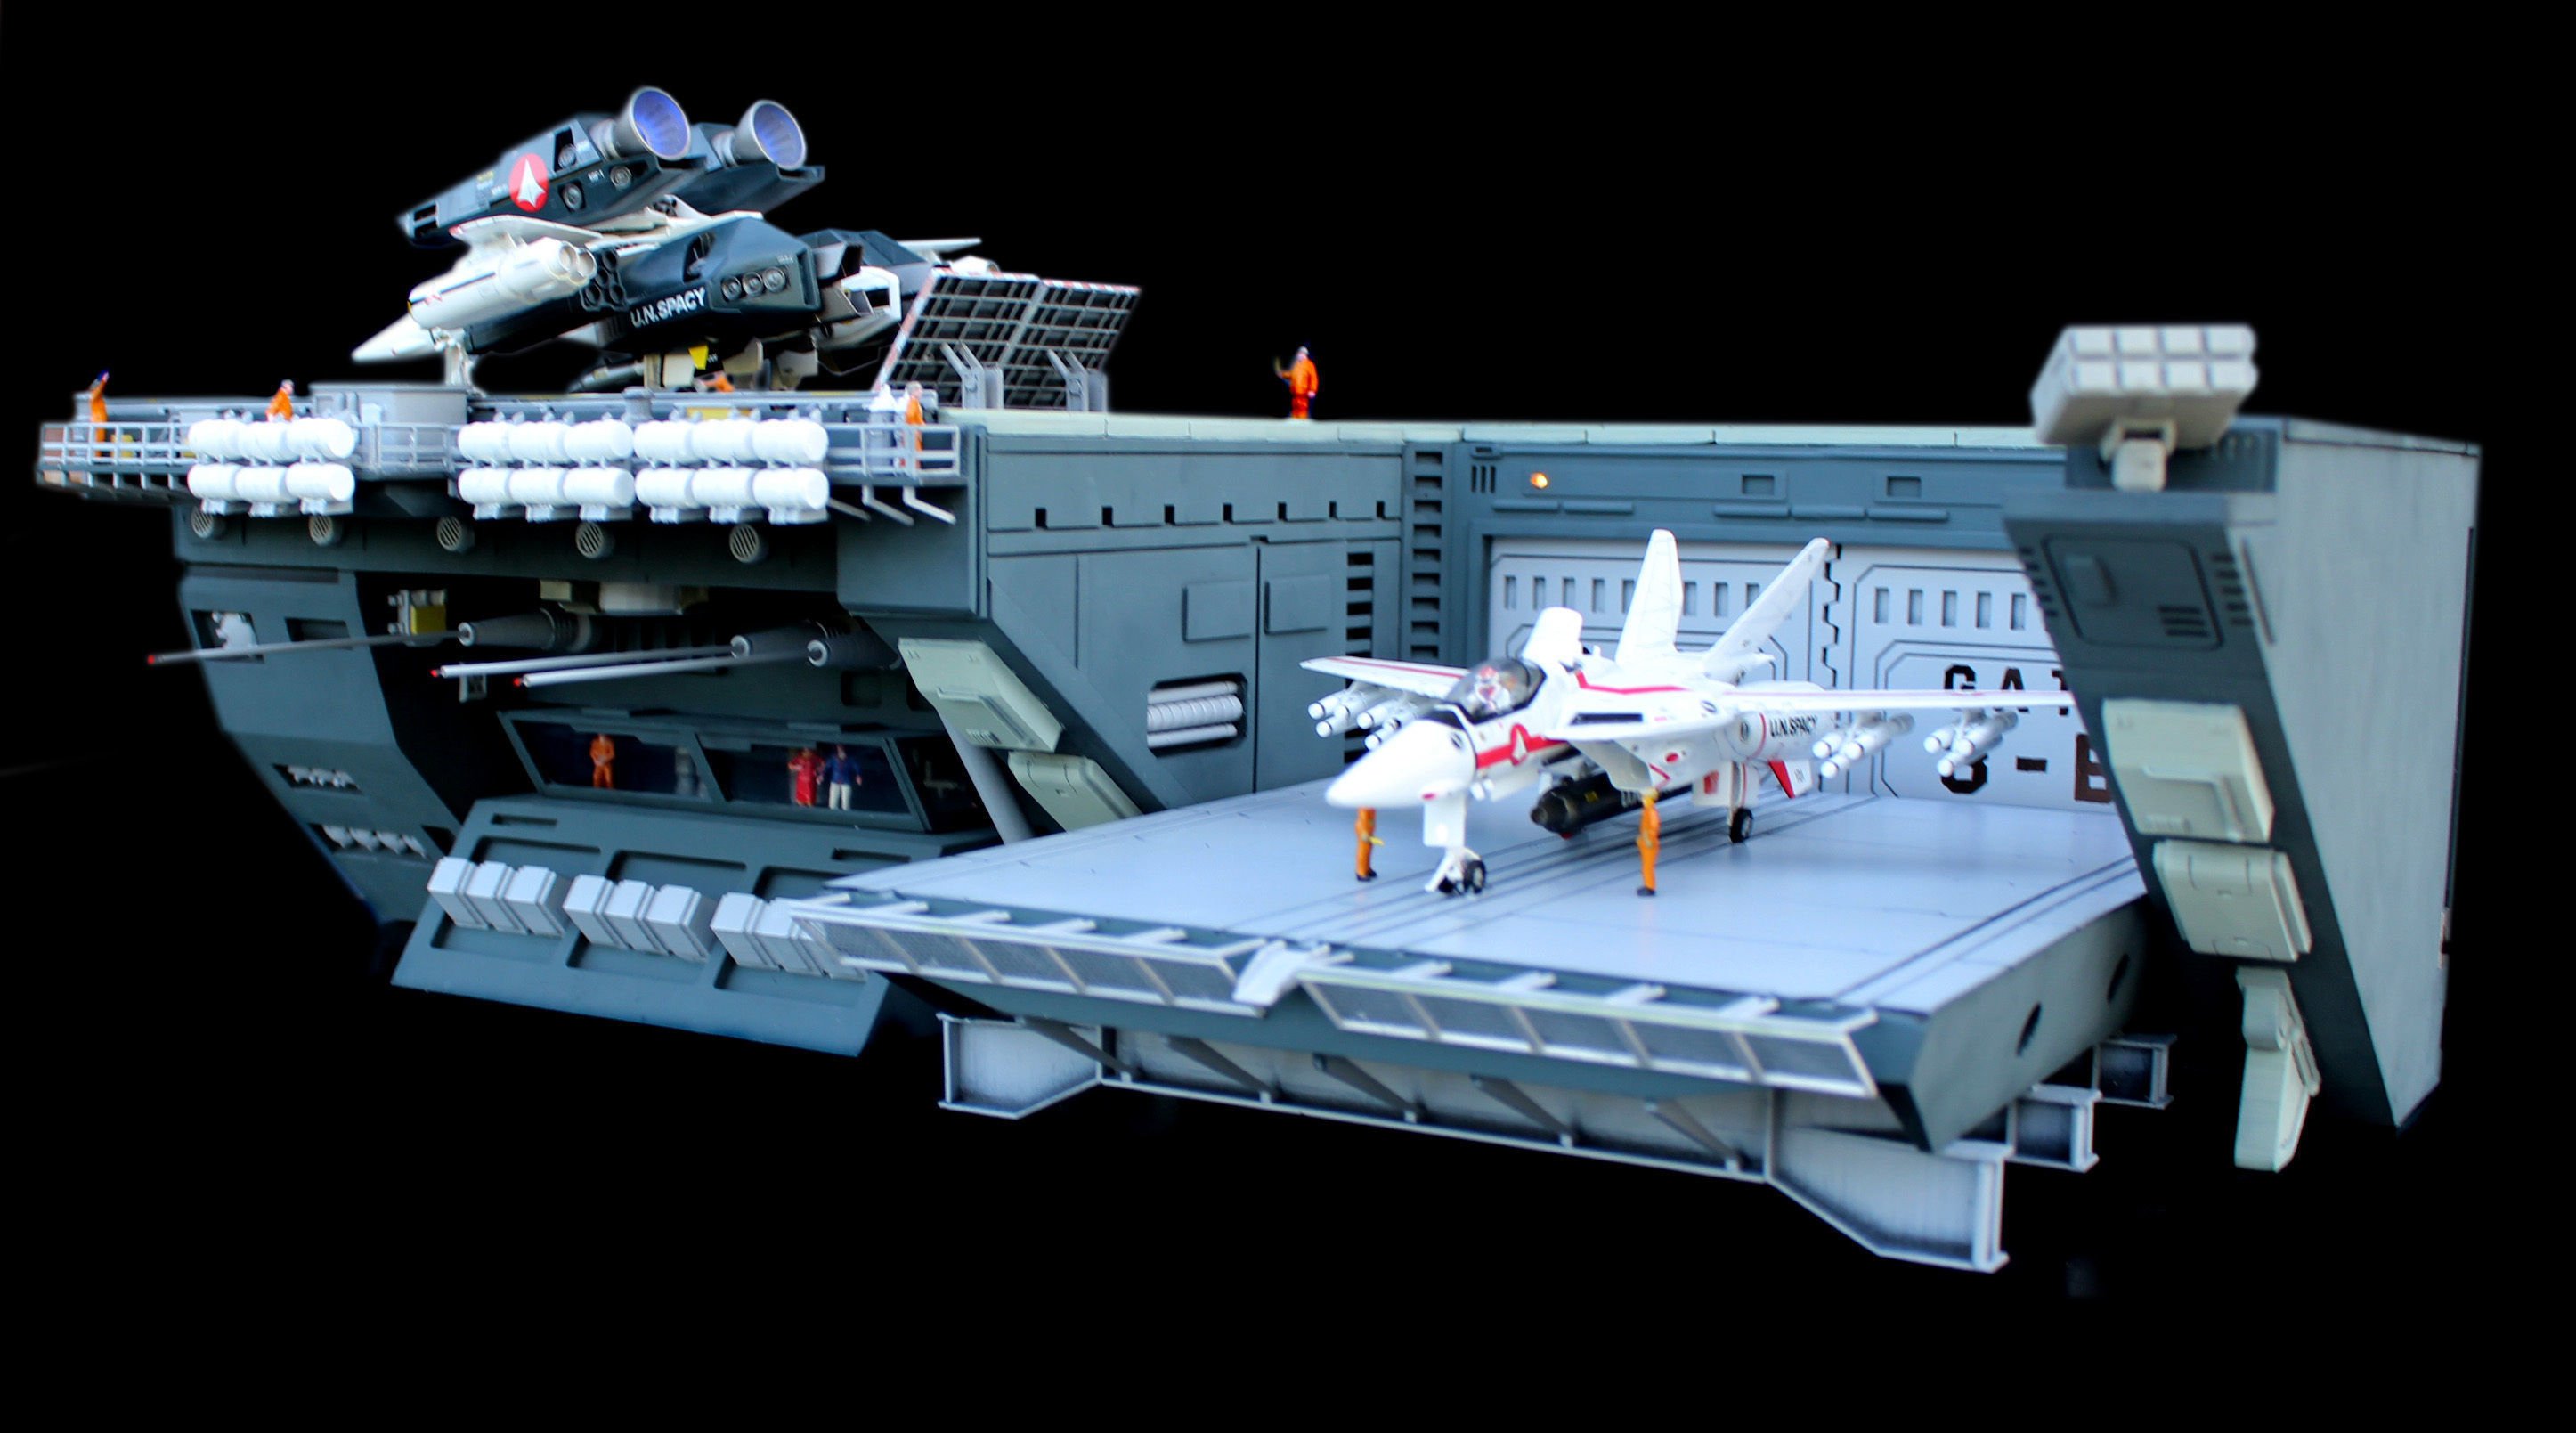 set3-macross-sdf1-prometheus-hanger-elevator-left-flight-deck-3d-model-obj-stl-blend-pdf-3mf (1).jpg